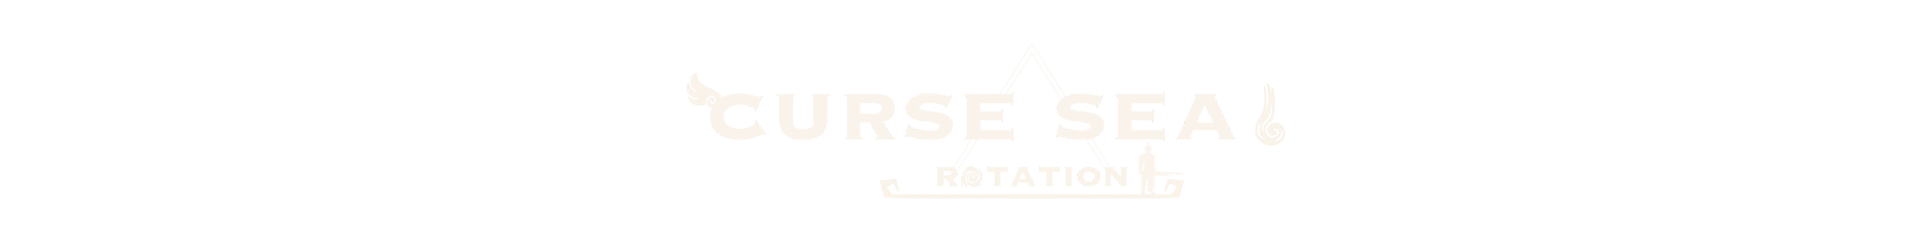 curse seal rotation